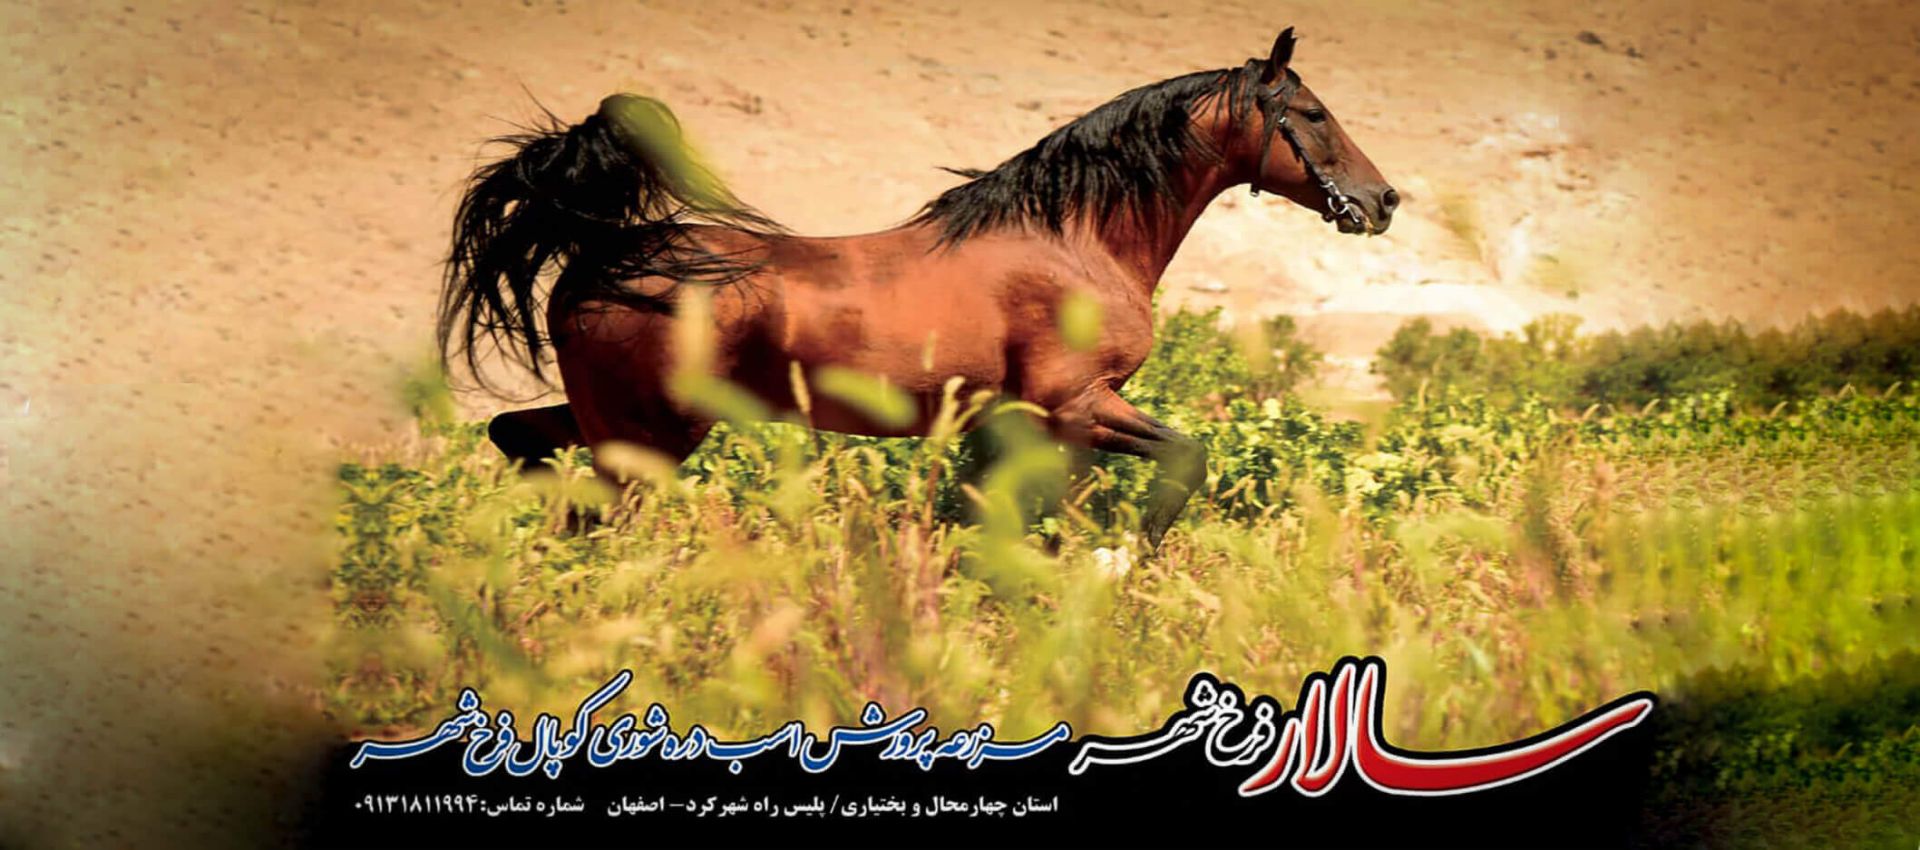 باشگاه سوار کاری و پرورش اسب کوپال فرخشهر